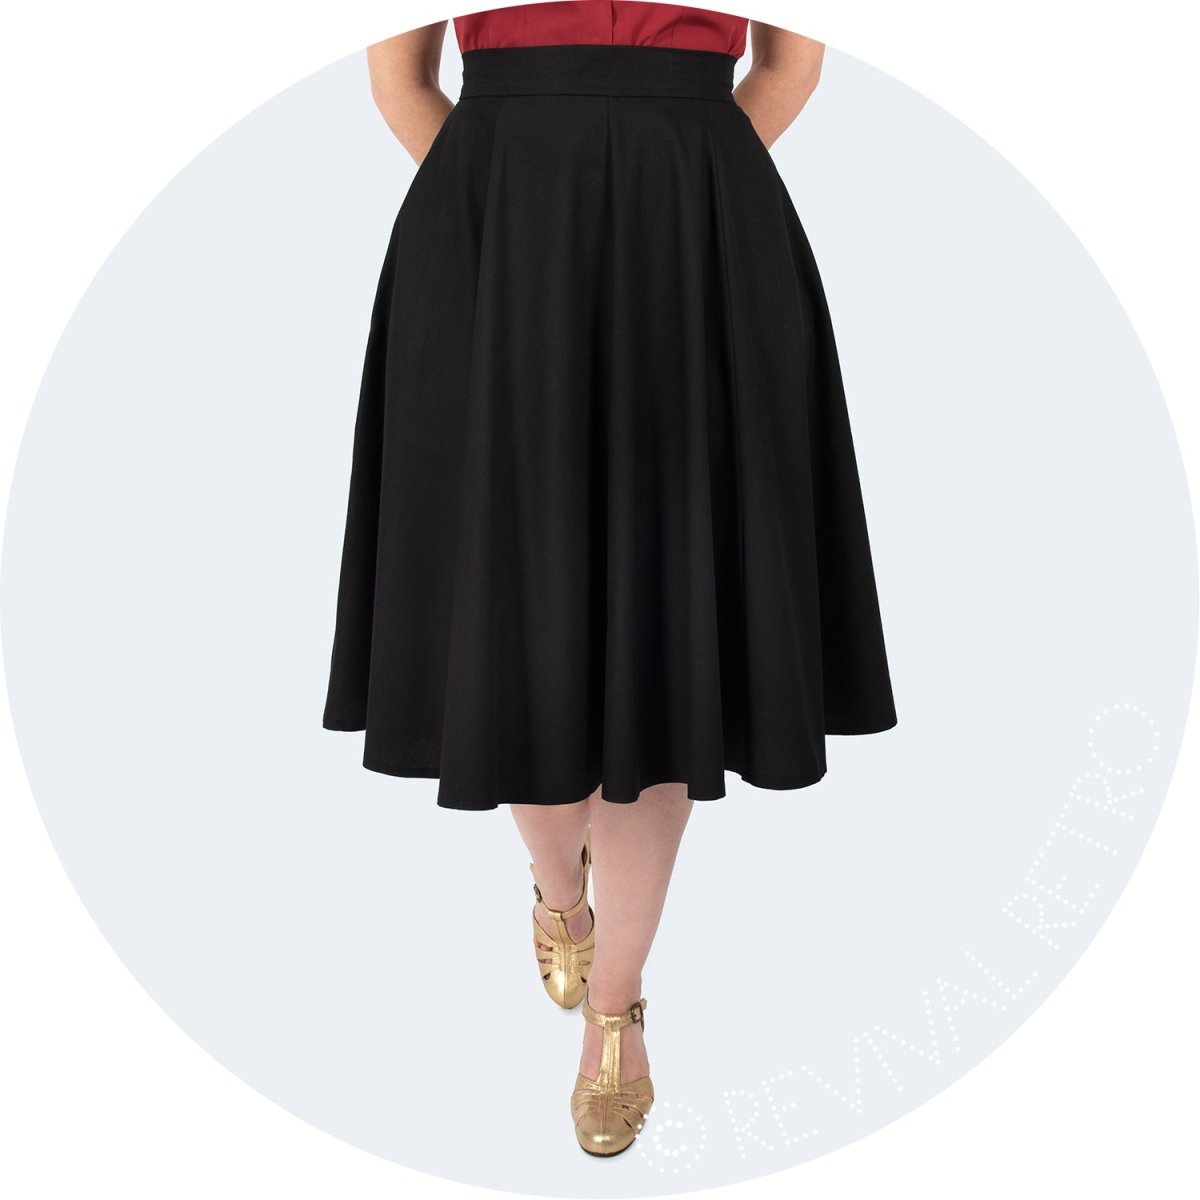 Organic cotton 1950s style skirt